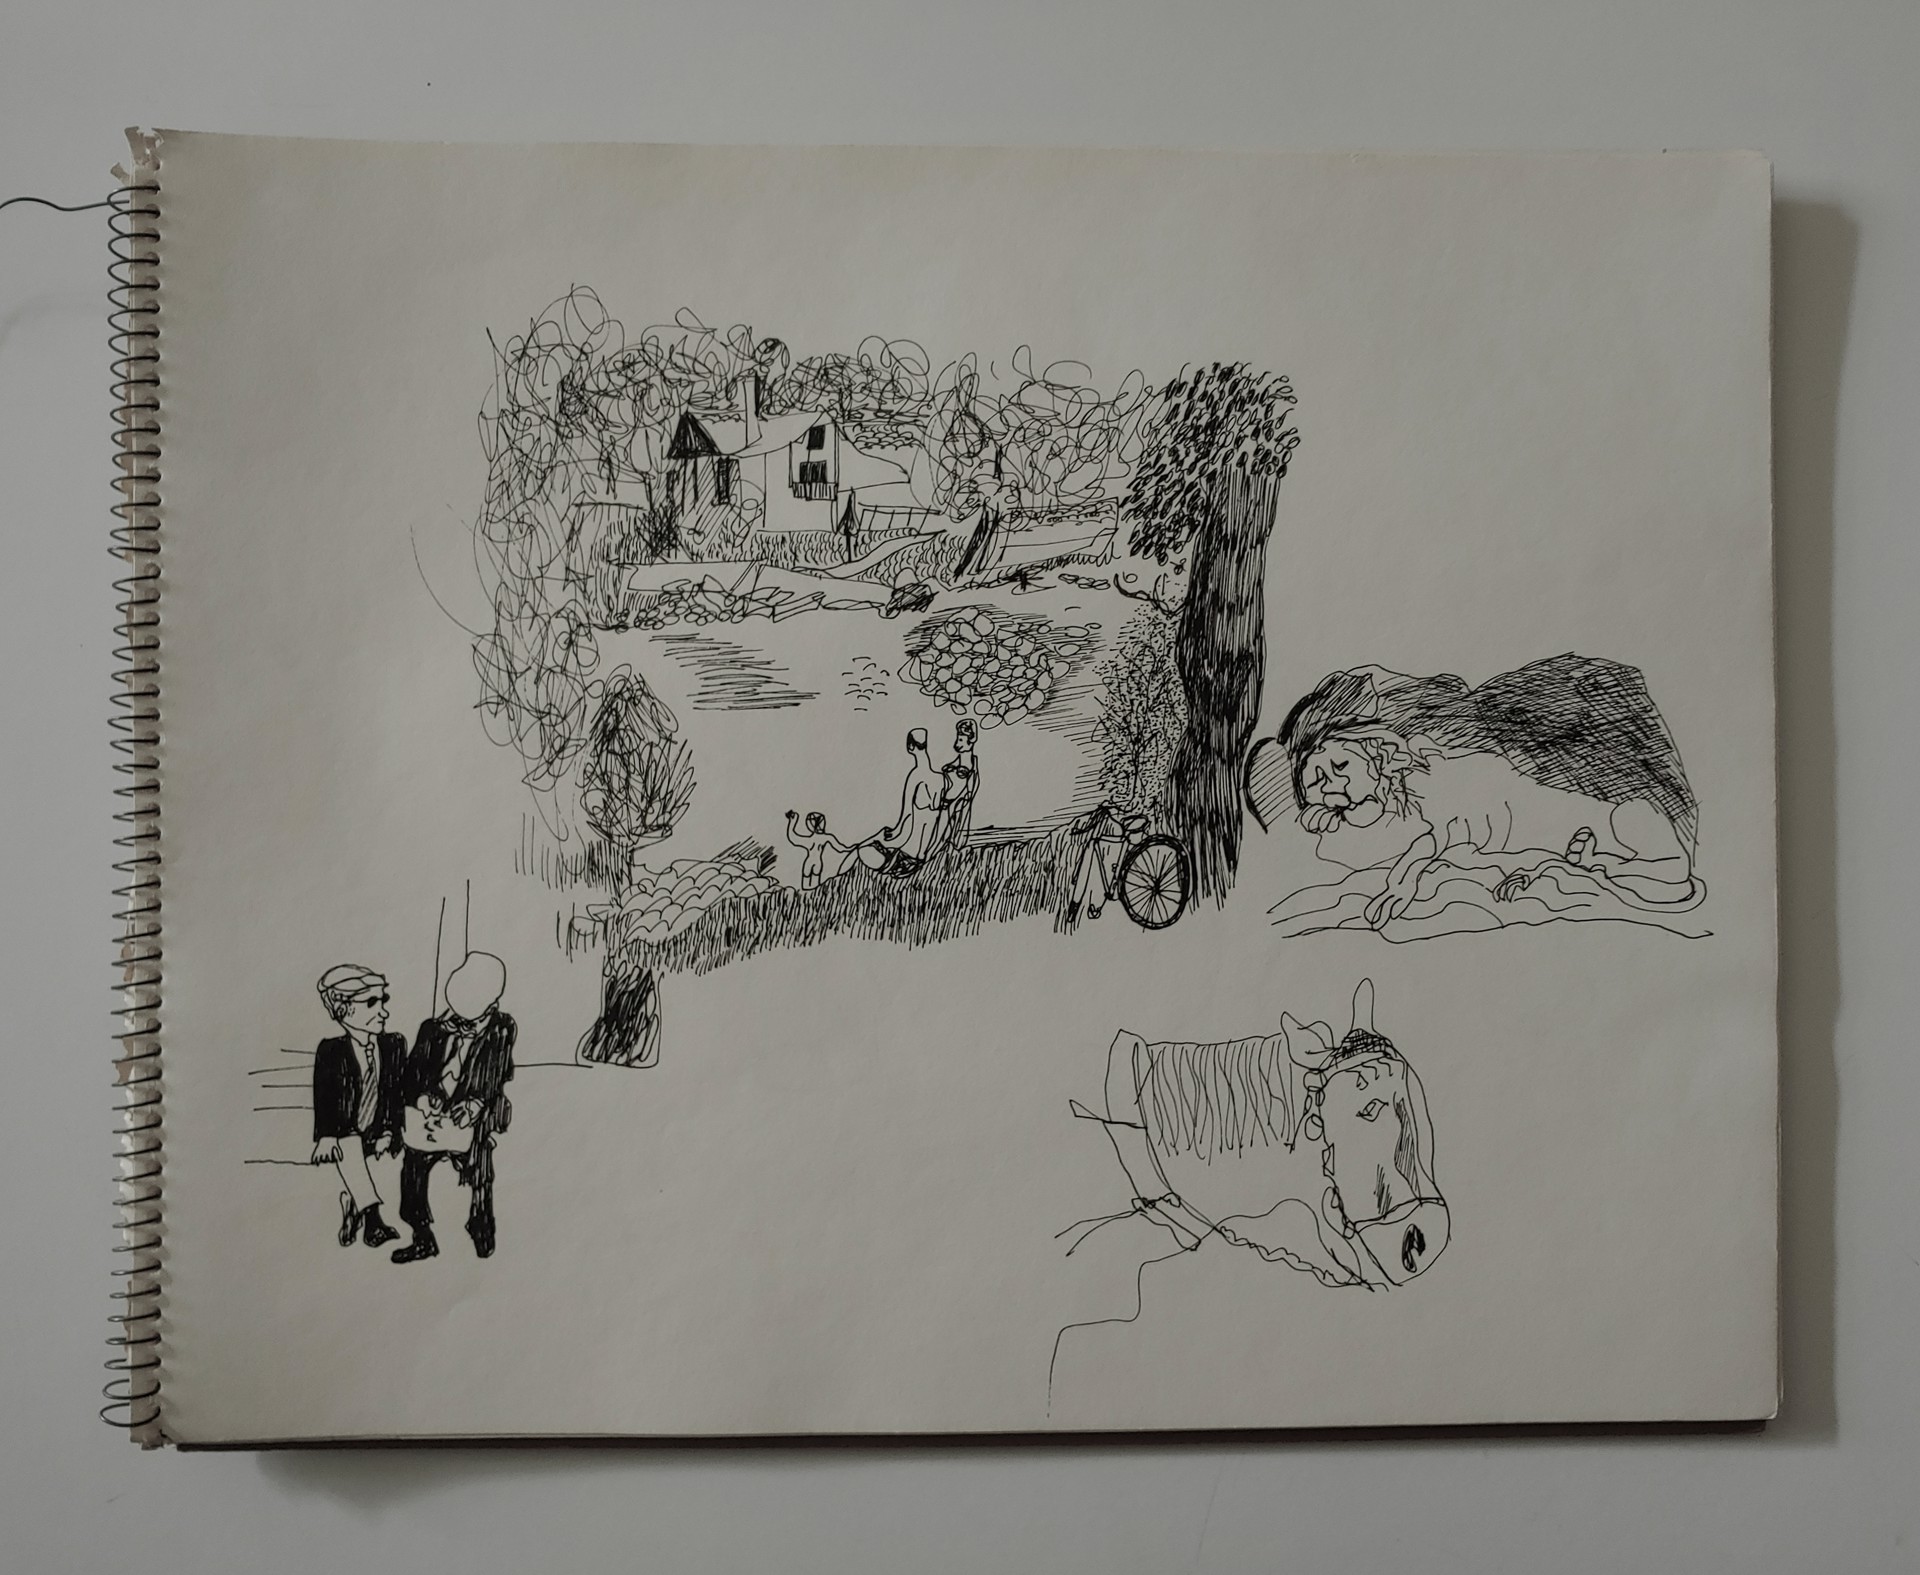 Karen Sketchbook 1970 by David Amdur